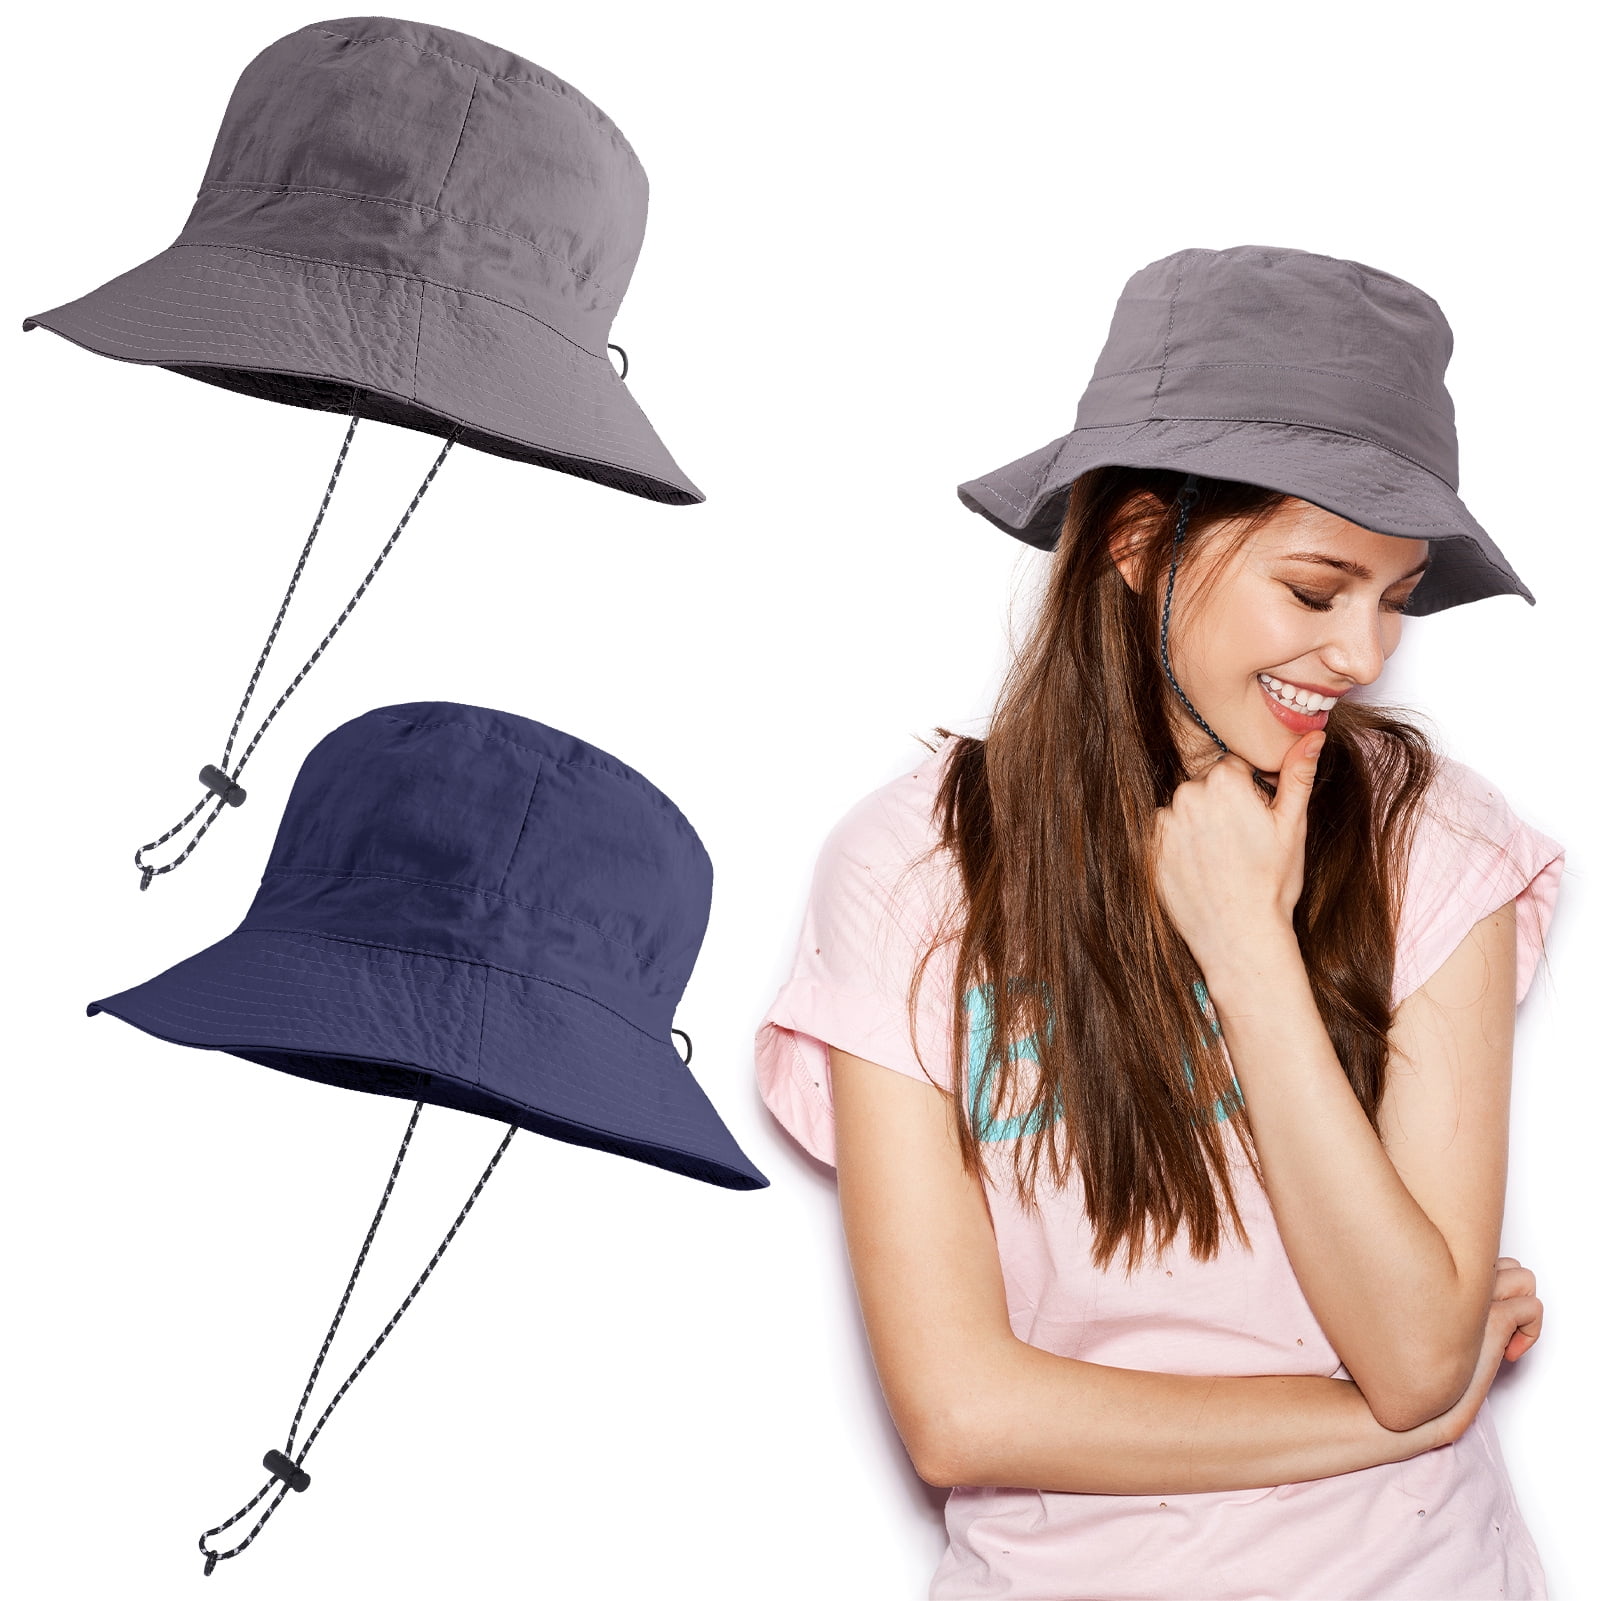 Rvlaugoaa Spring and summer men and women couple hats travel beach hats  outdoor travel sun protection sun hats fashion casual sun hats, Womens Sun